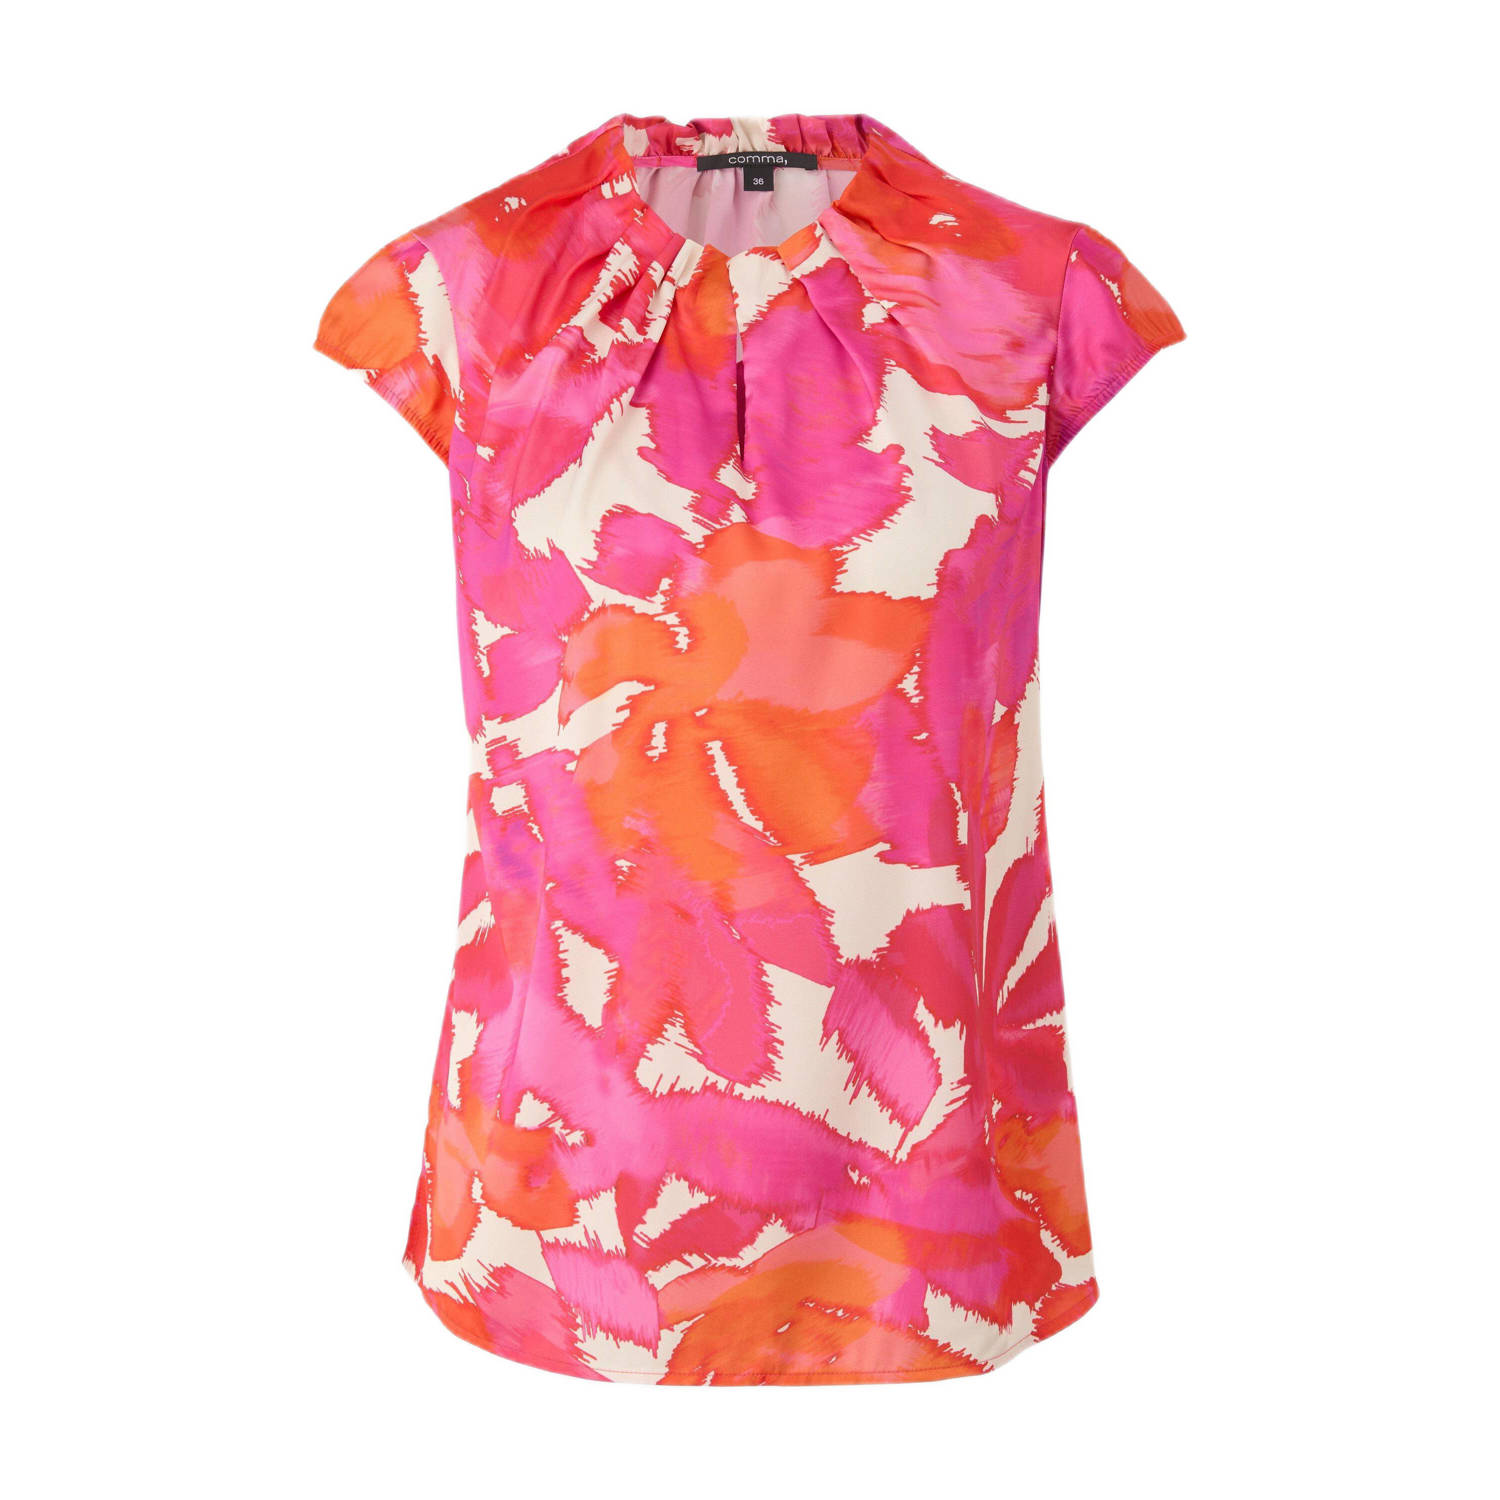 Comma blousetop met all over print roze oranje ecru